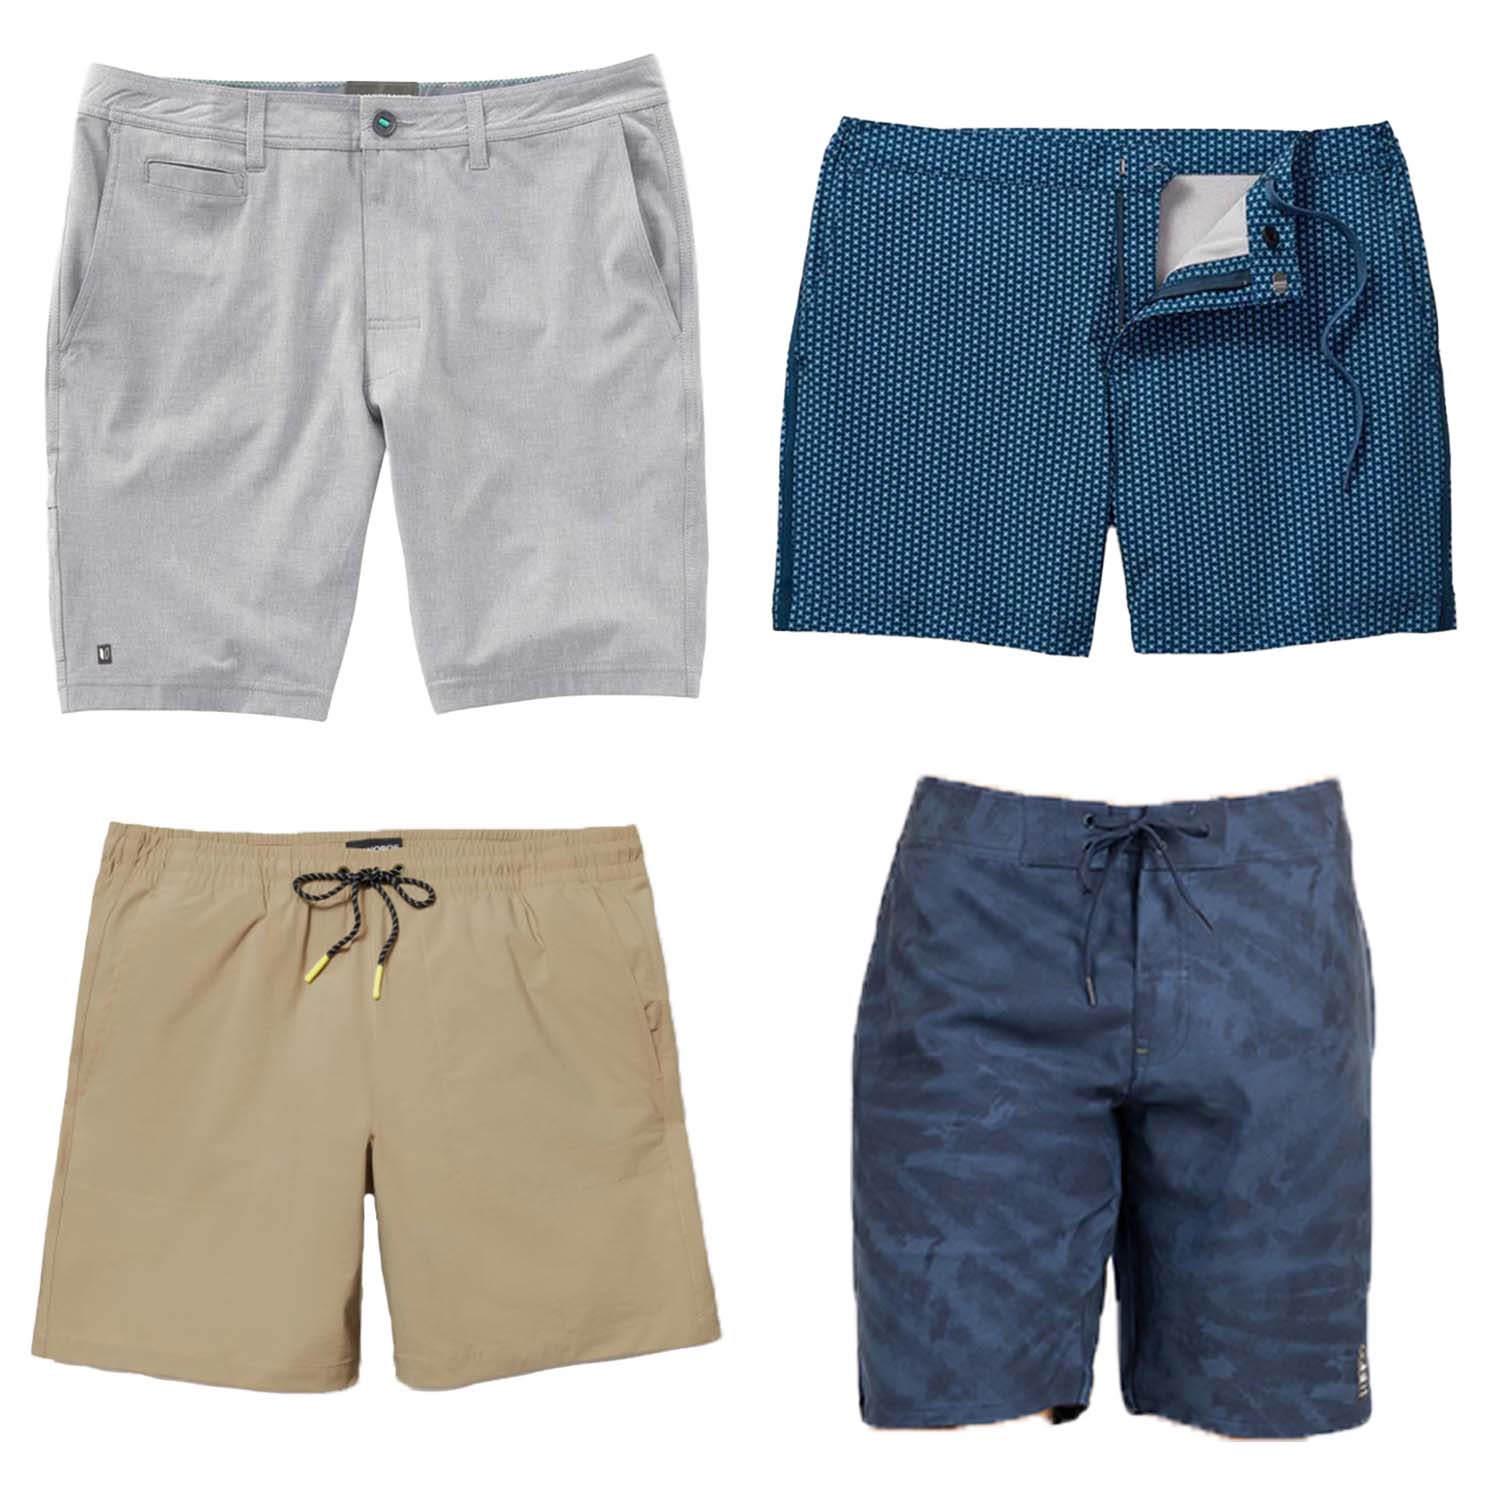 9 golf shorts you can wear to the beach | Golf Equipment: Clubs, Balls,  Bags | Golf Digest